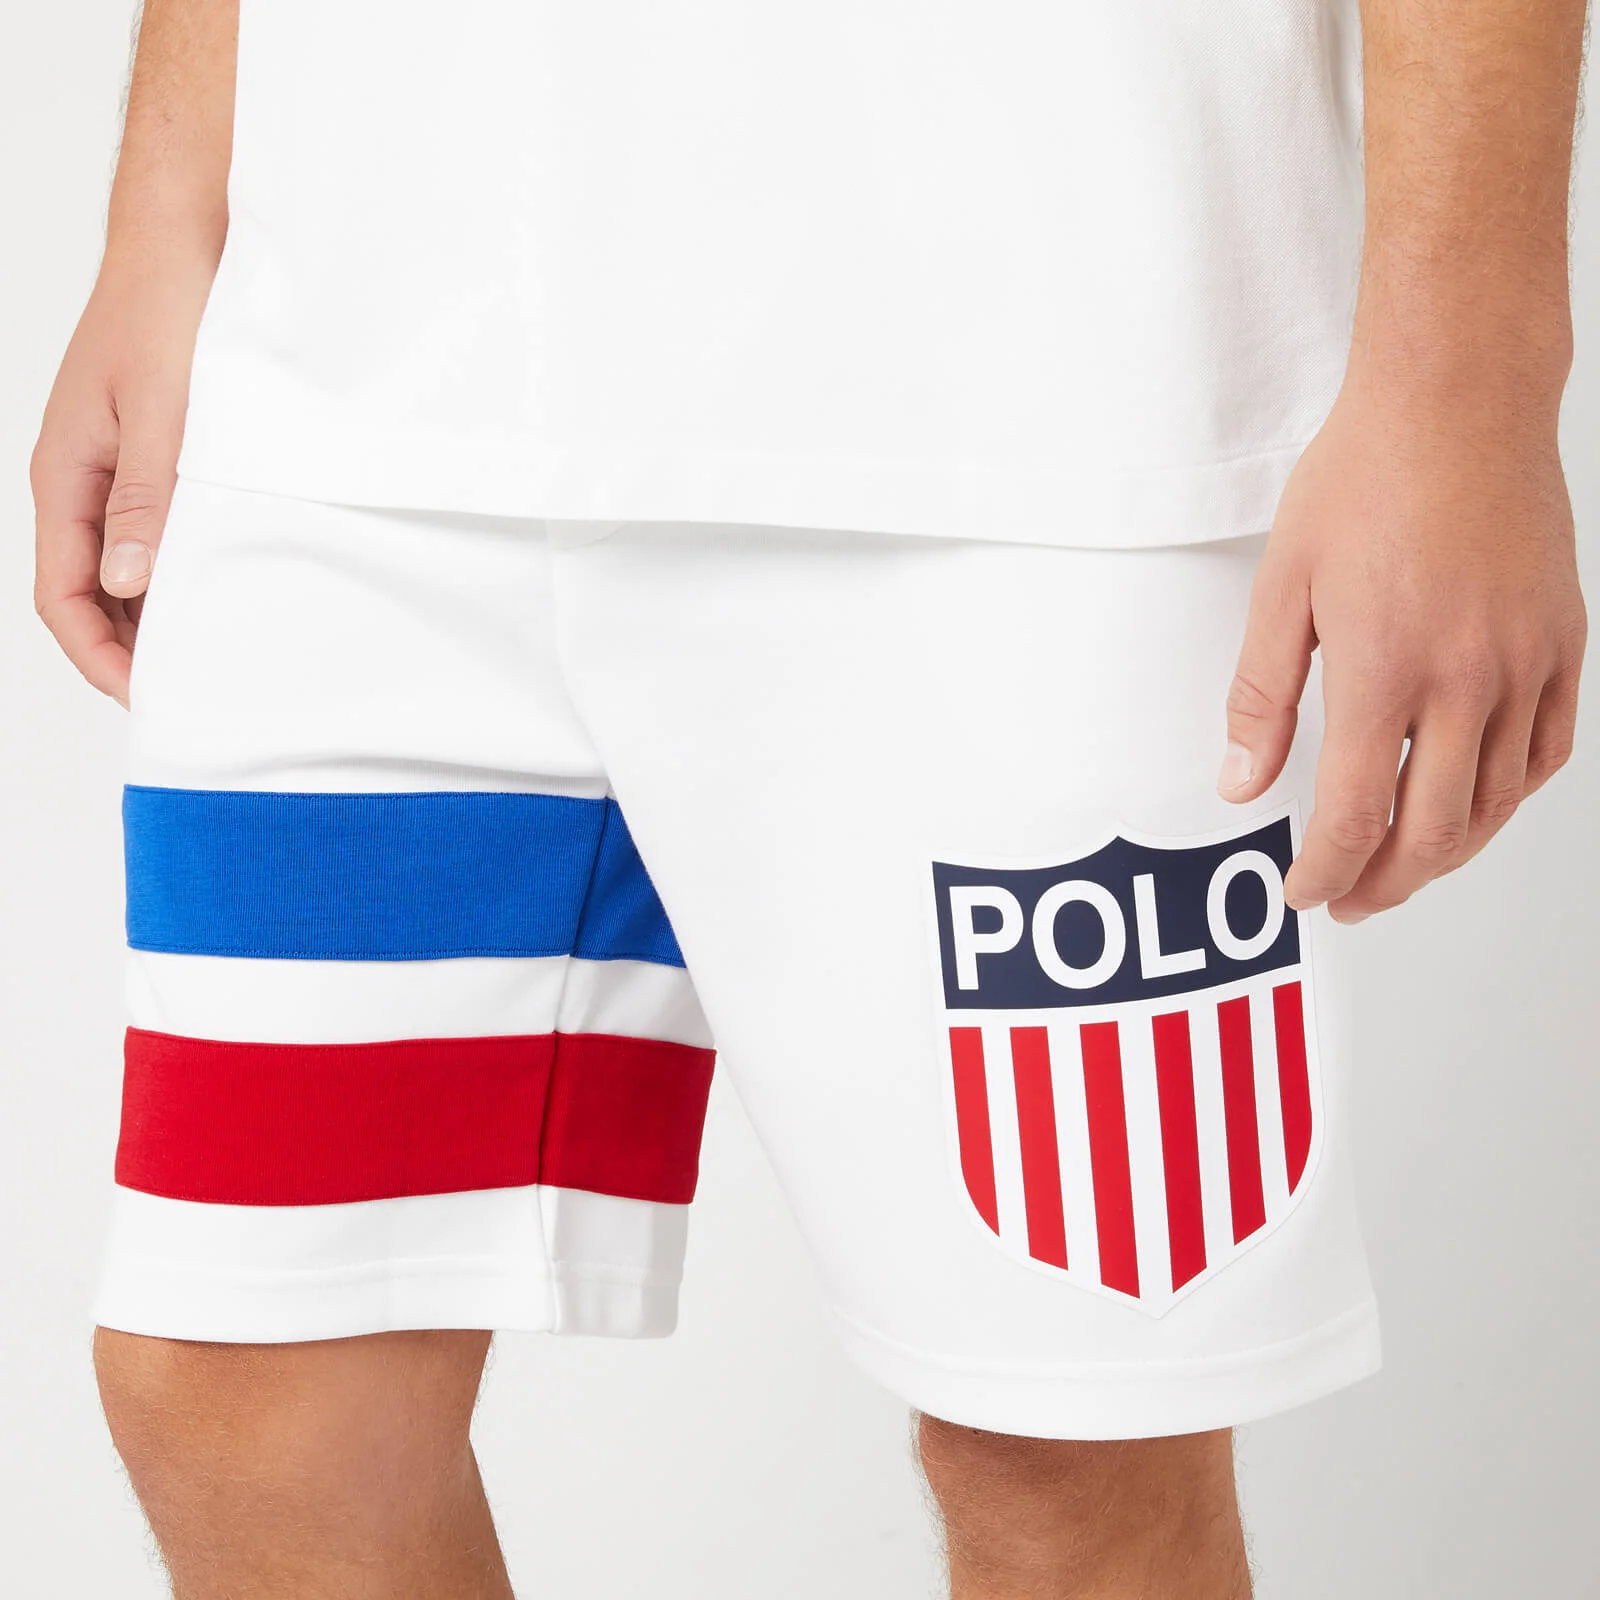 Polo Ralph Lauren Men's USA Shorts - White Multi Image 1